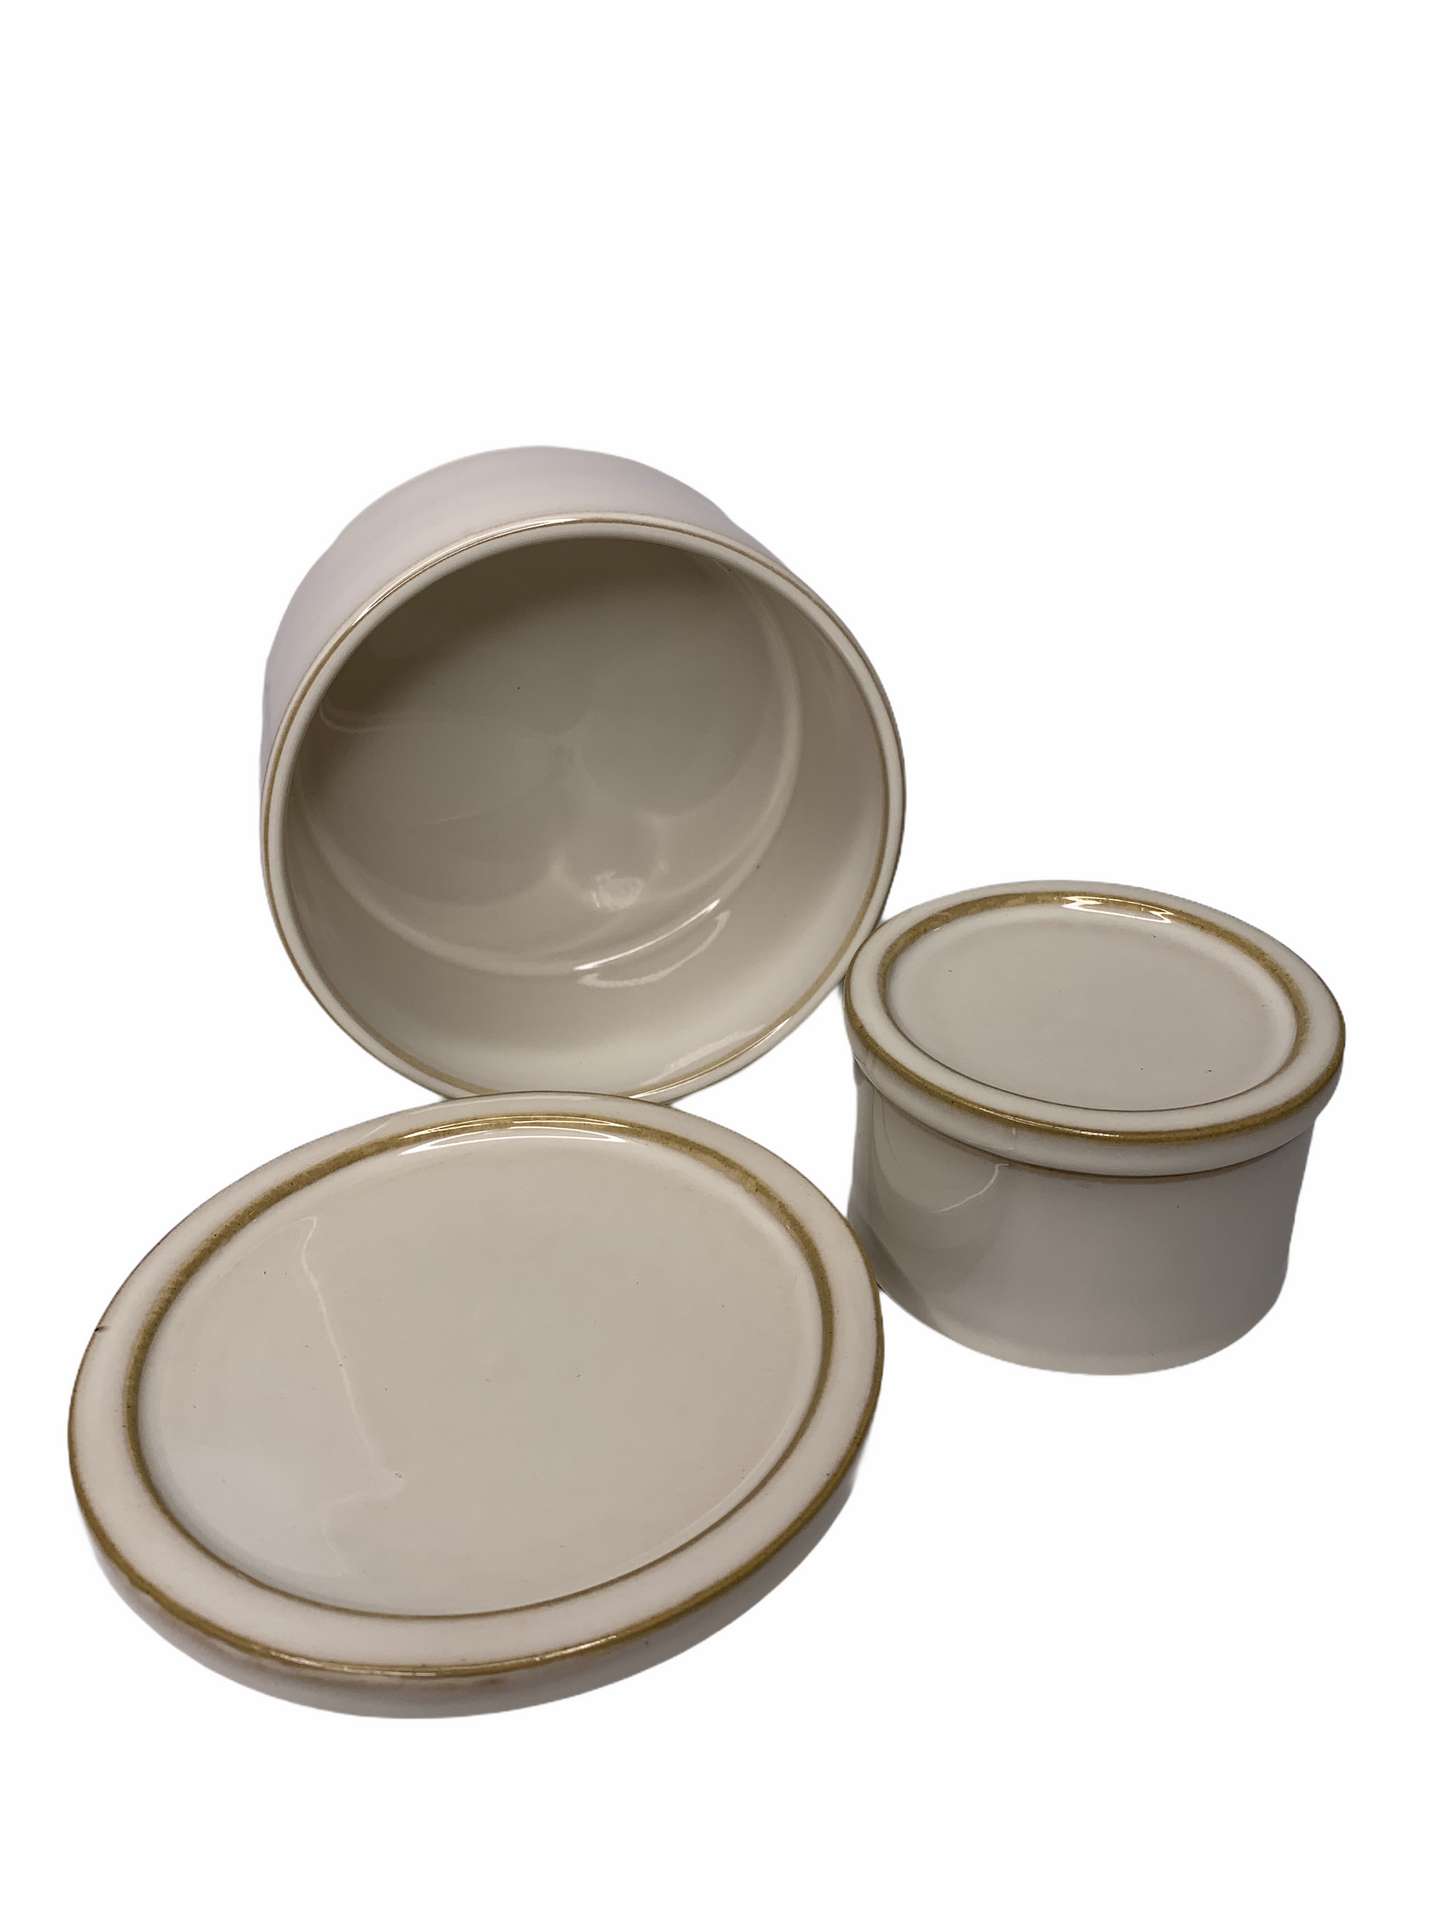 Ceramic Dish With Lid (Set of 2)